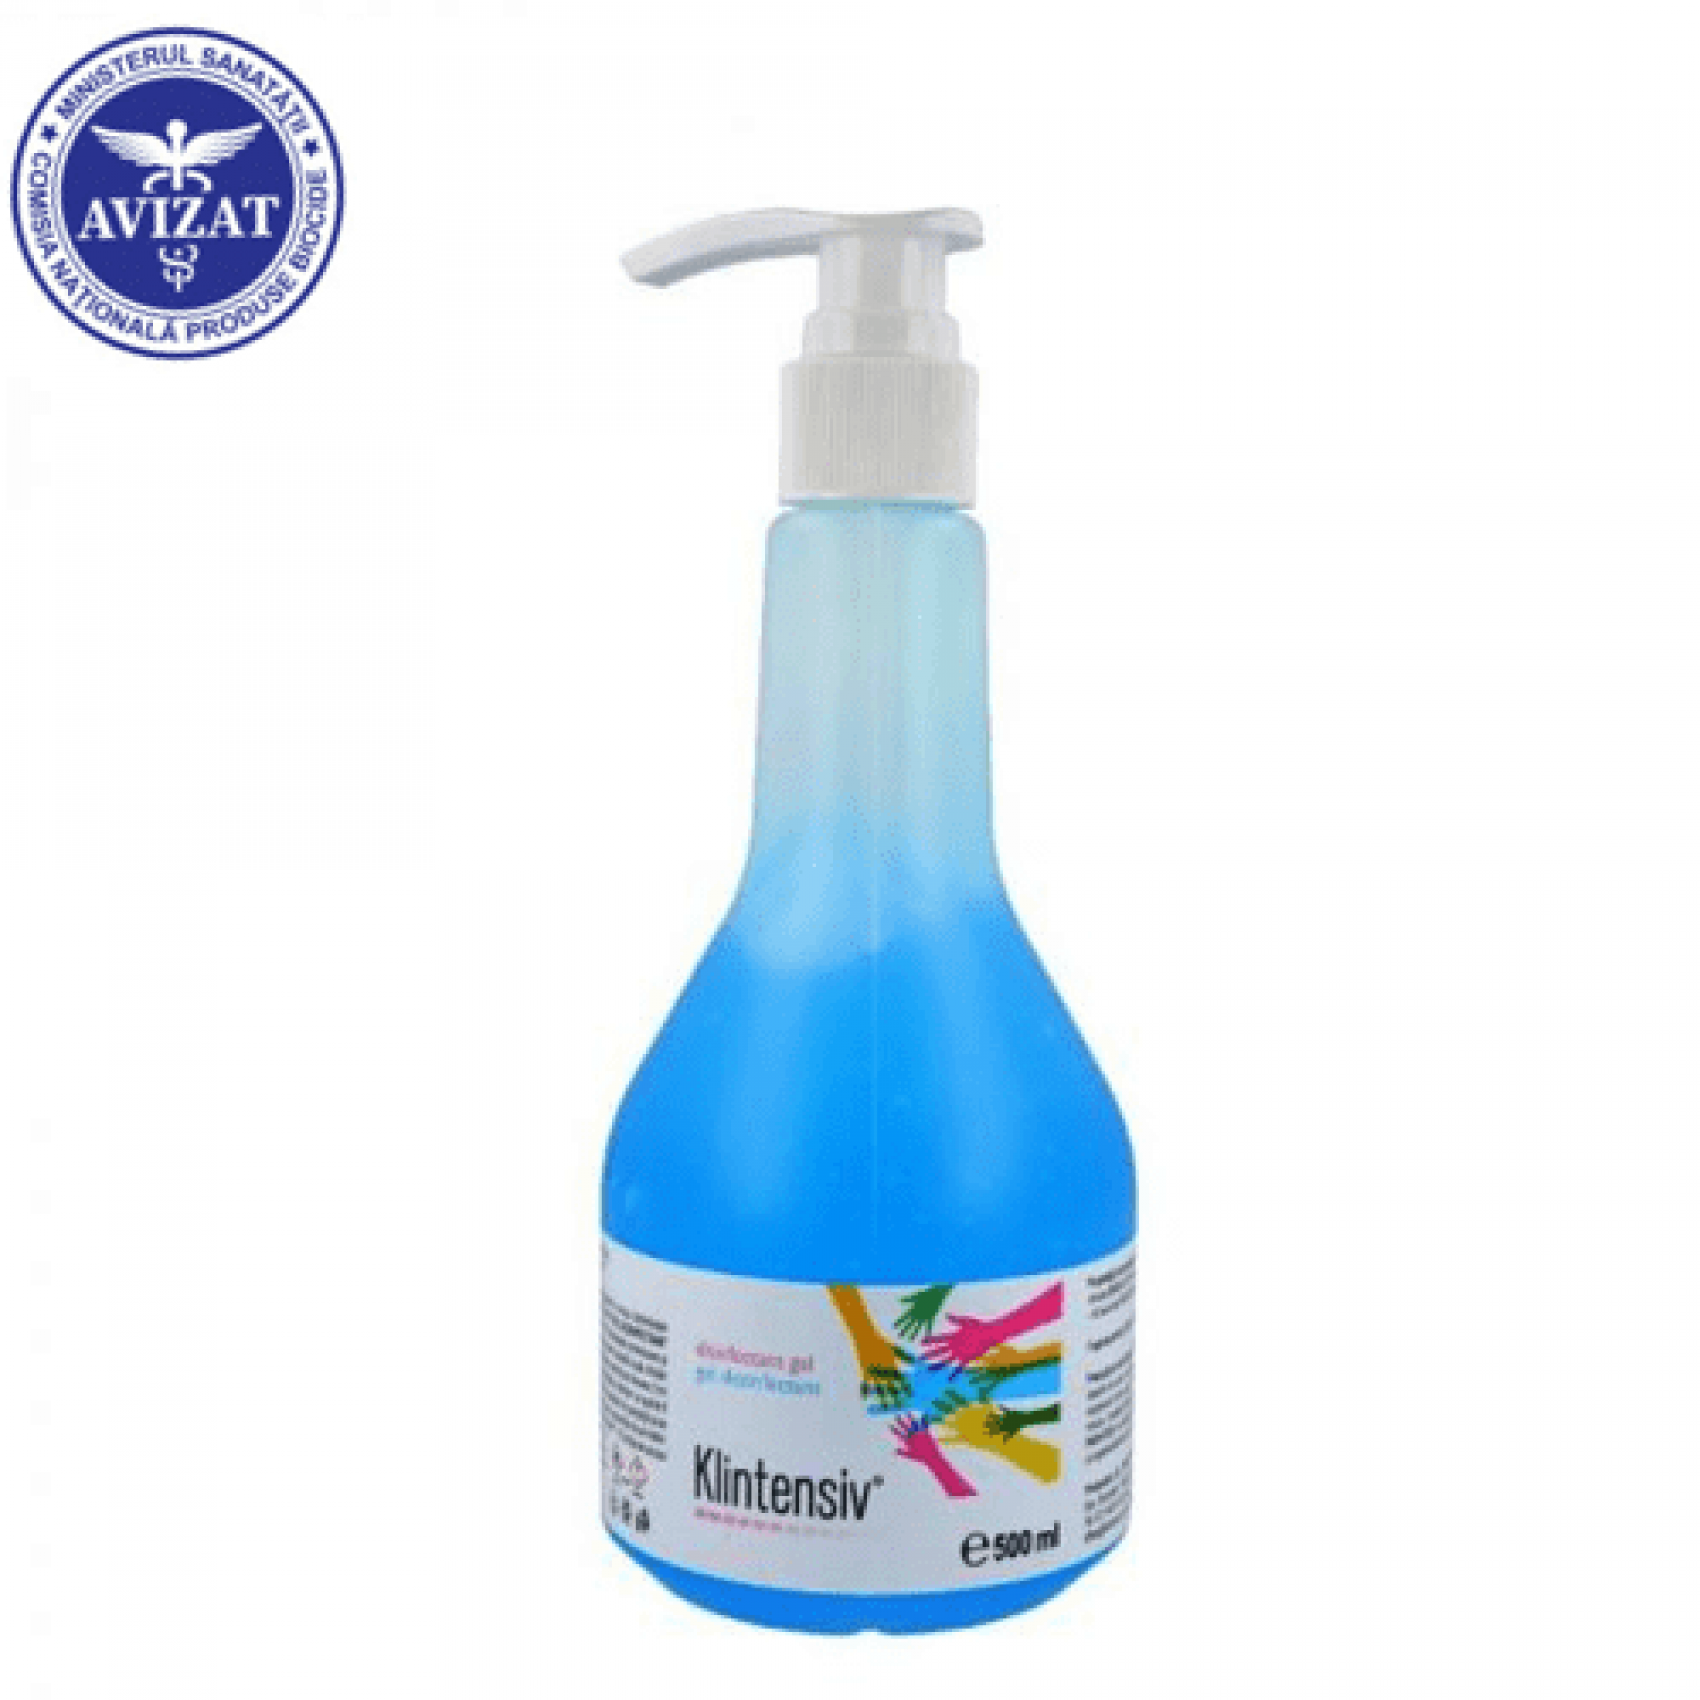 Klintensiv gel dezinfectant virucid pentru maini 500 ml